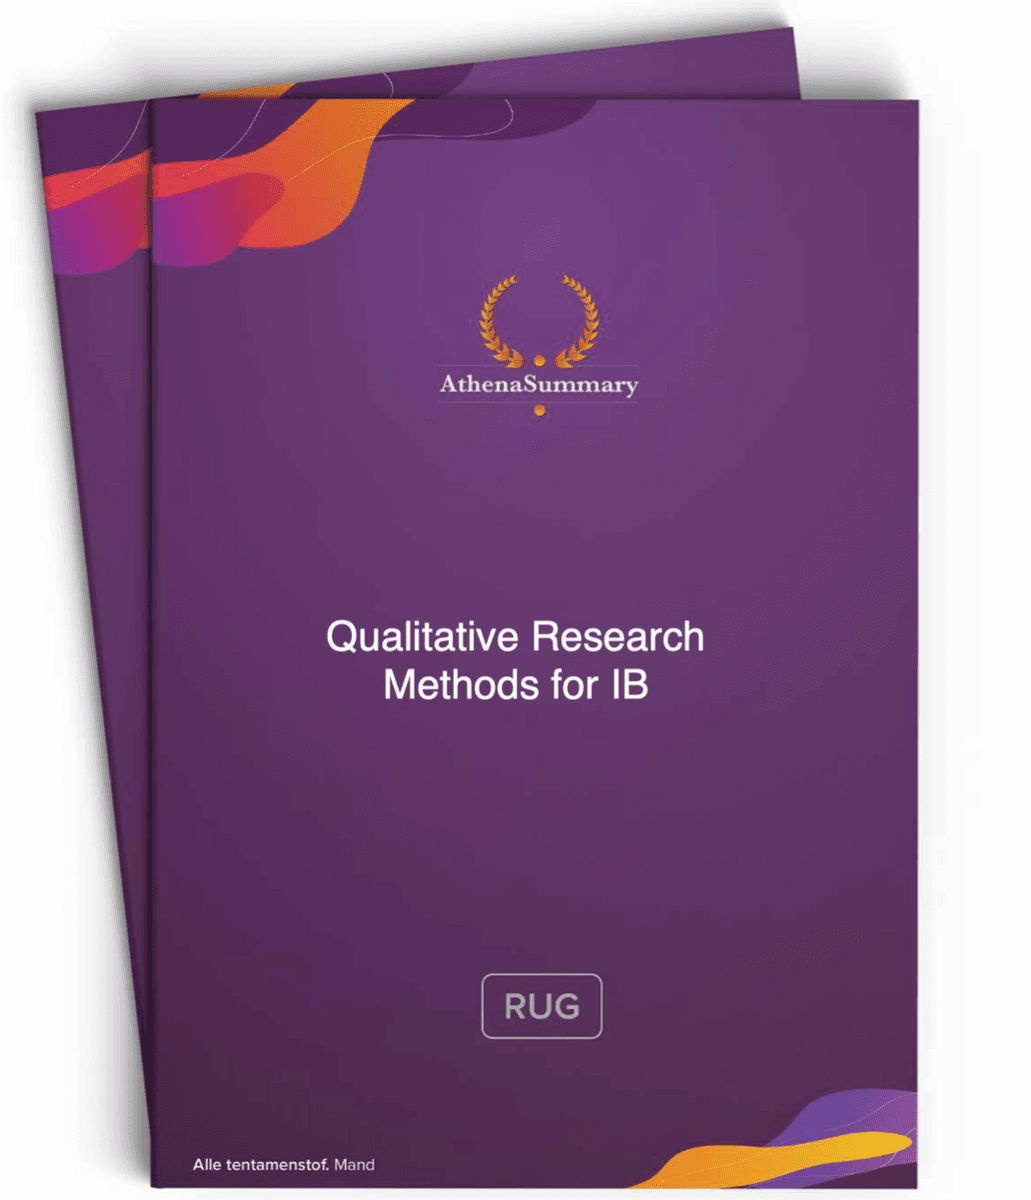 Literature Summary - Qualitative Research Methods for IB